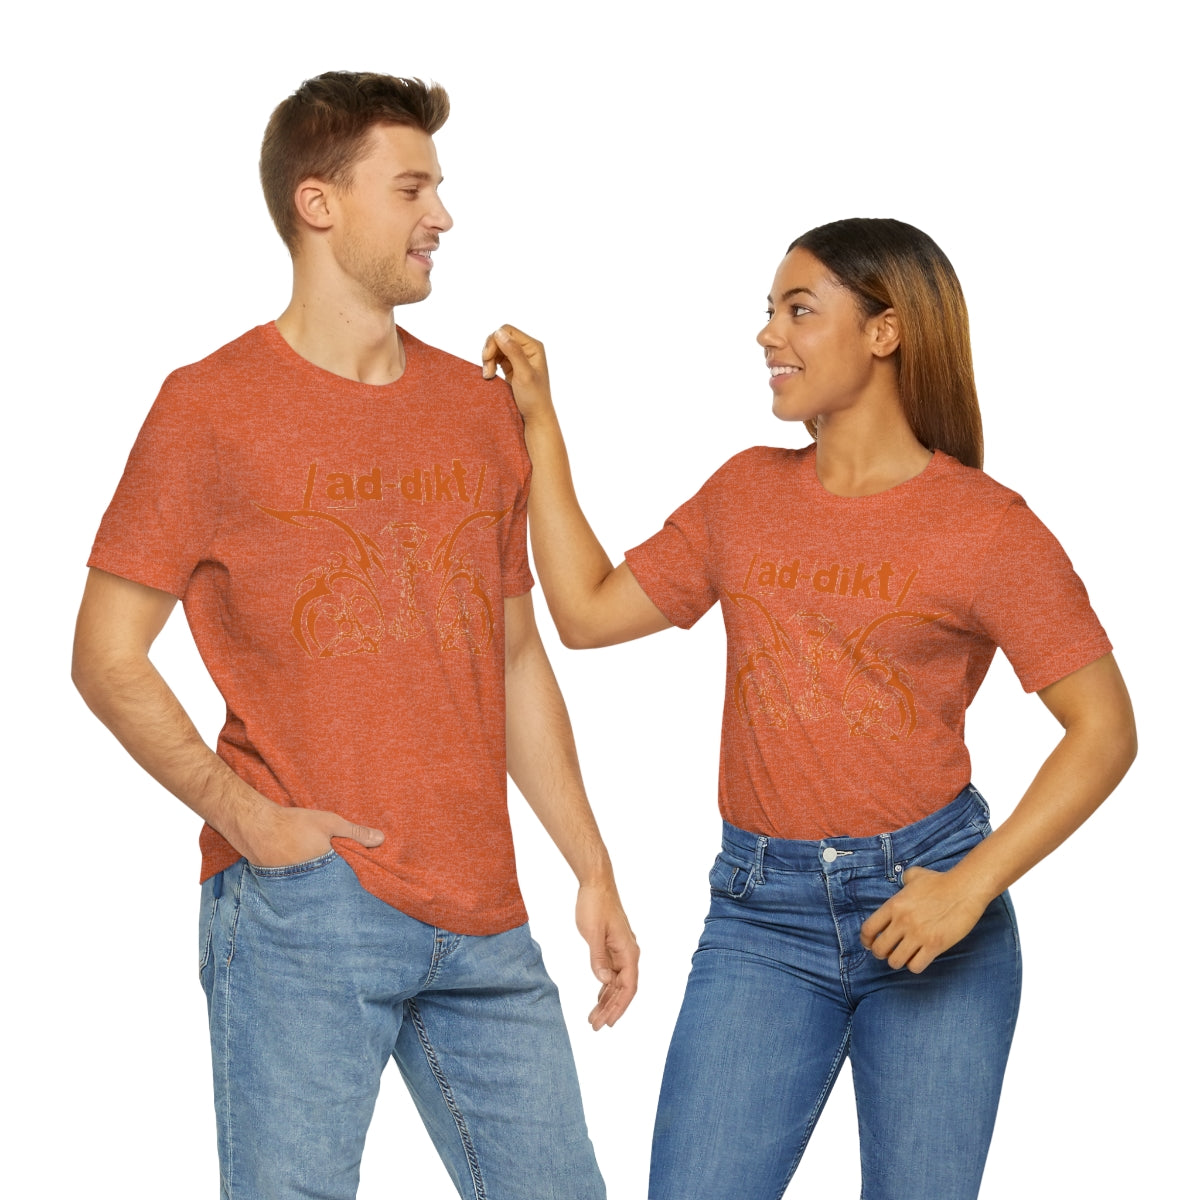 Bow /ad-dikt/: orange Softstyle T-Shirt